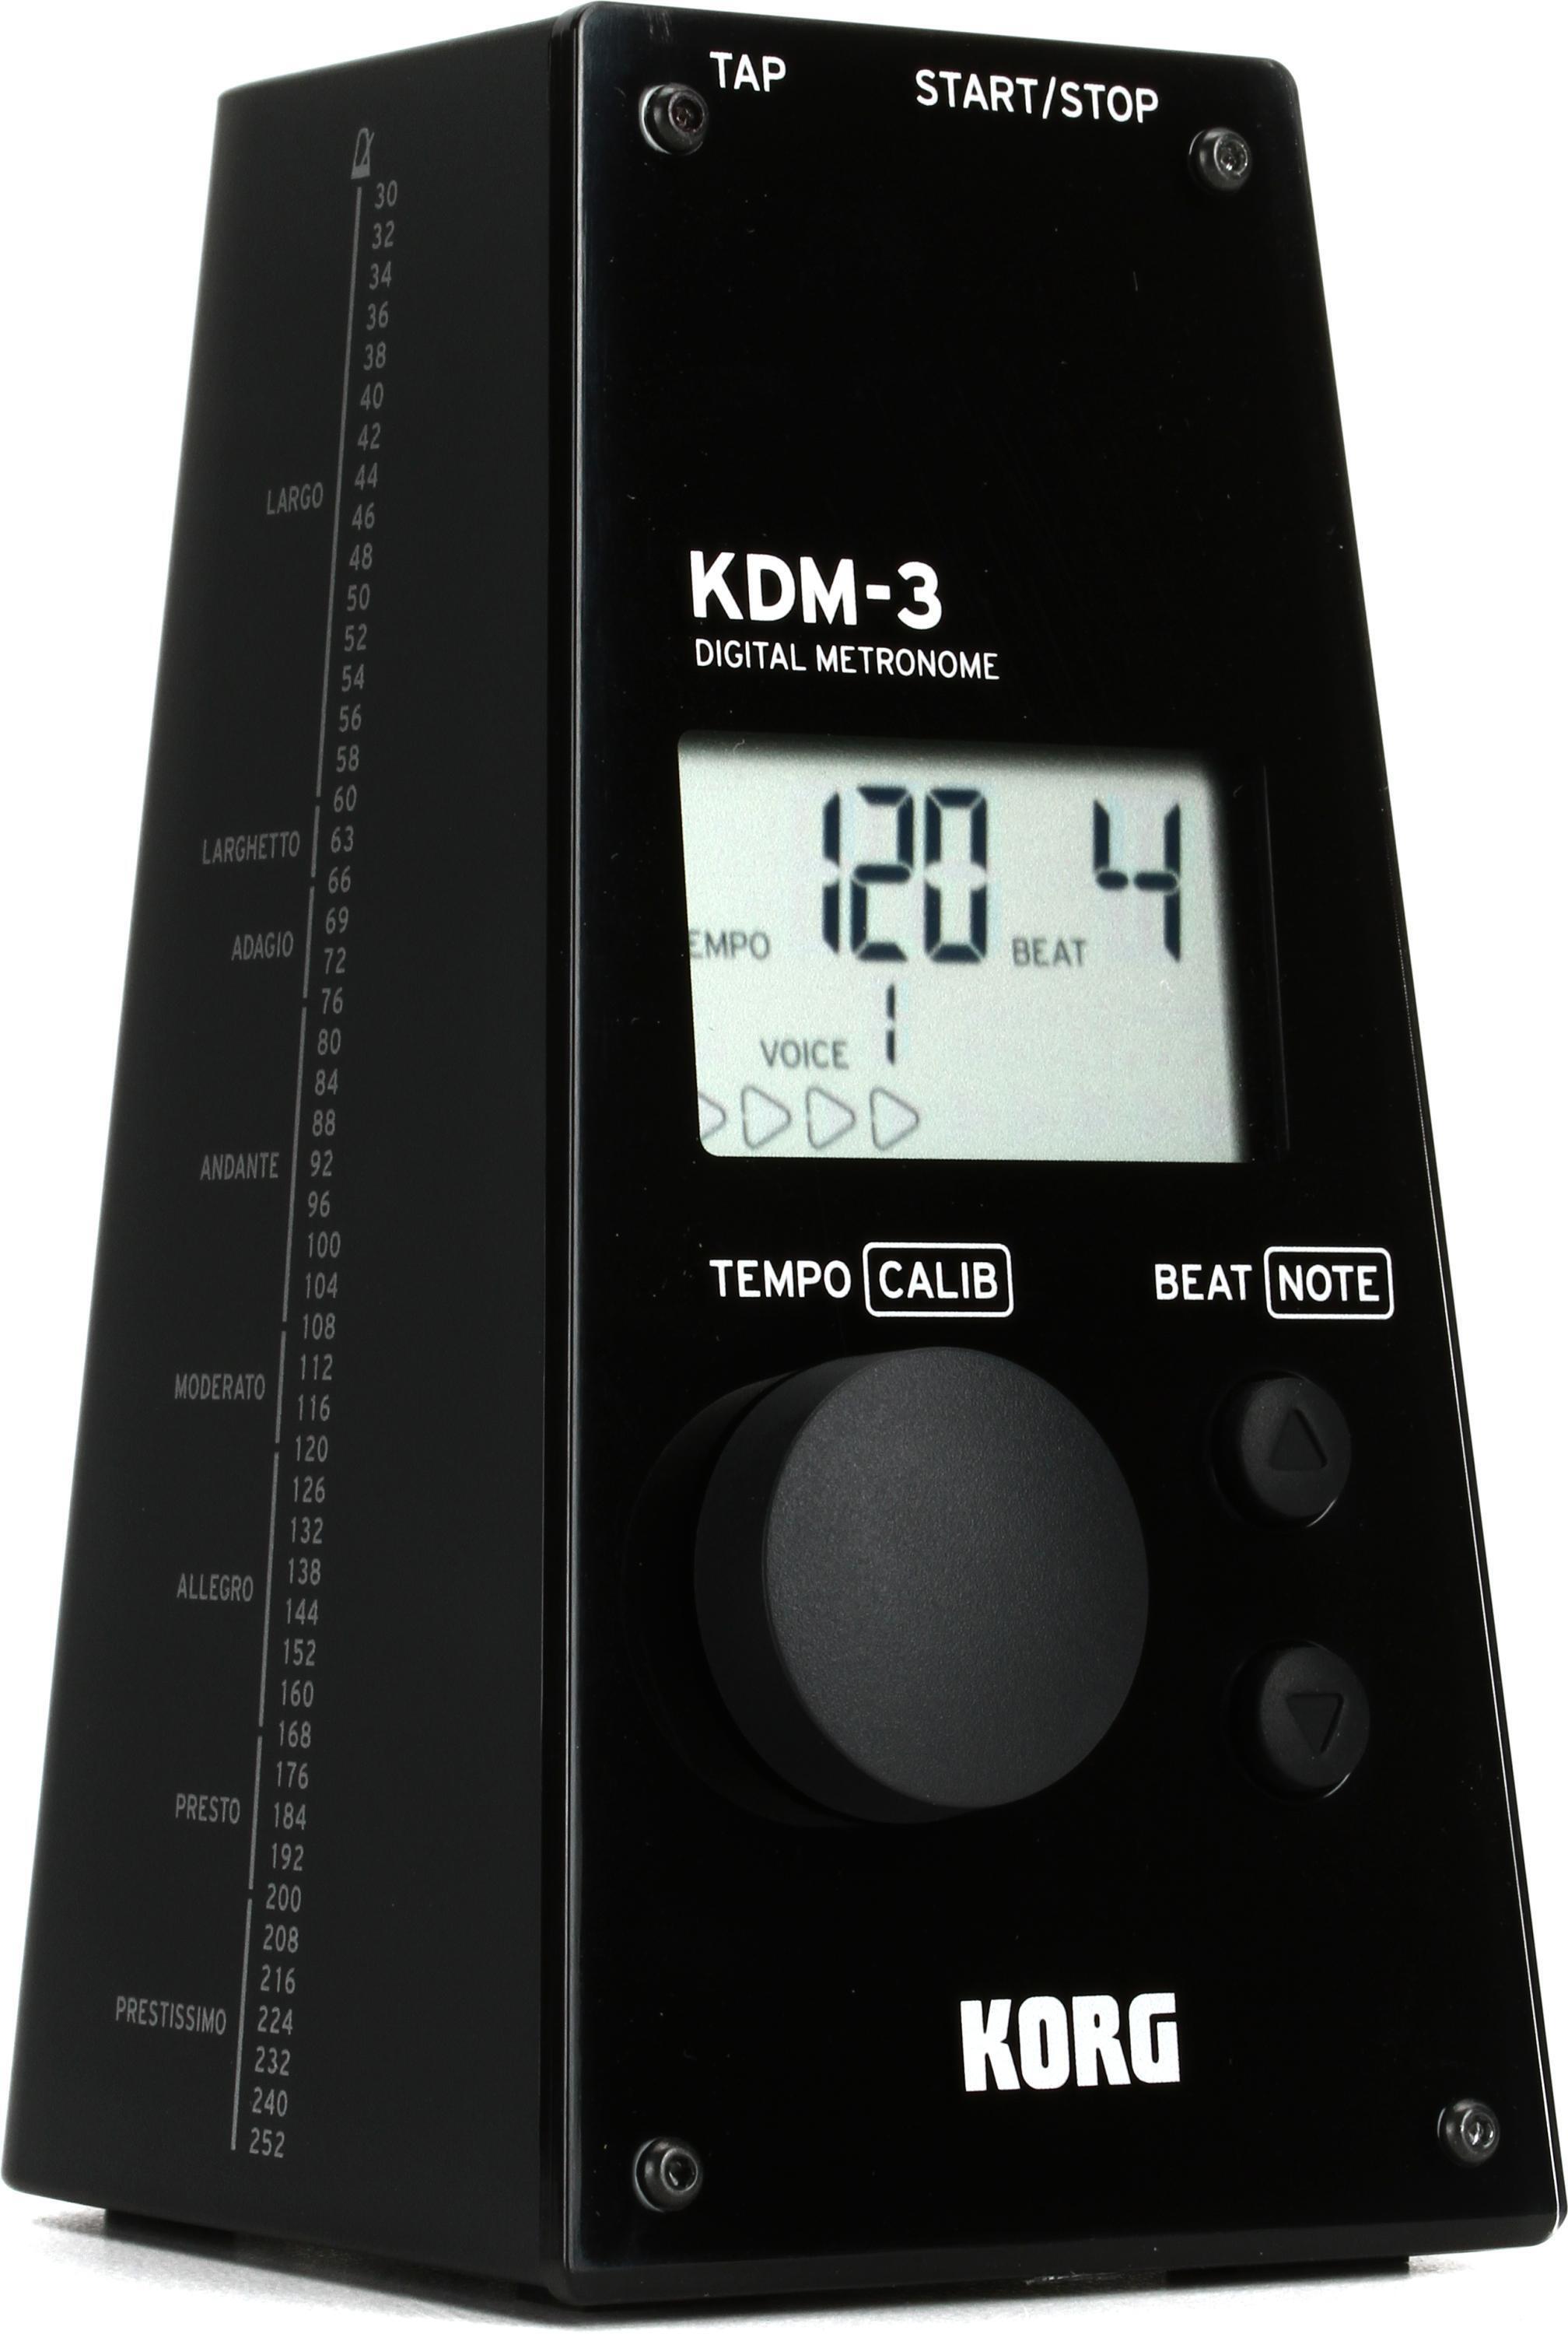 METRONOME ELECTRONIQUE KORG KDM-3